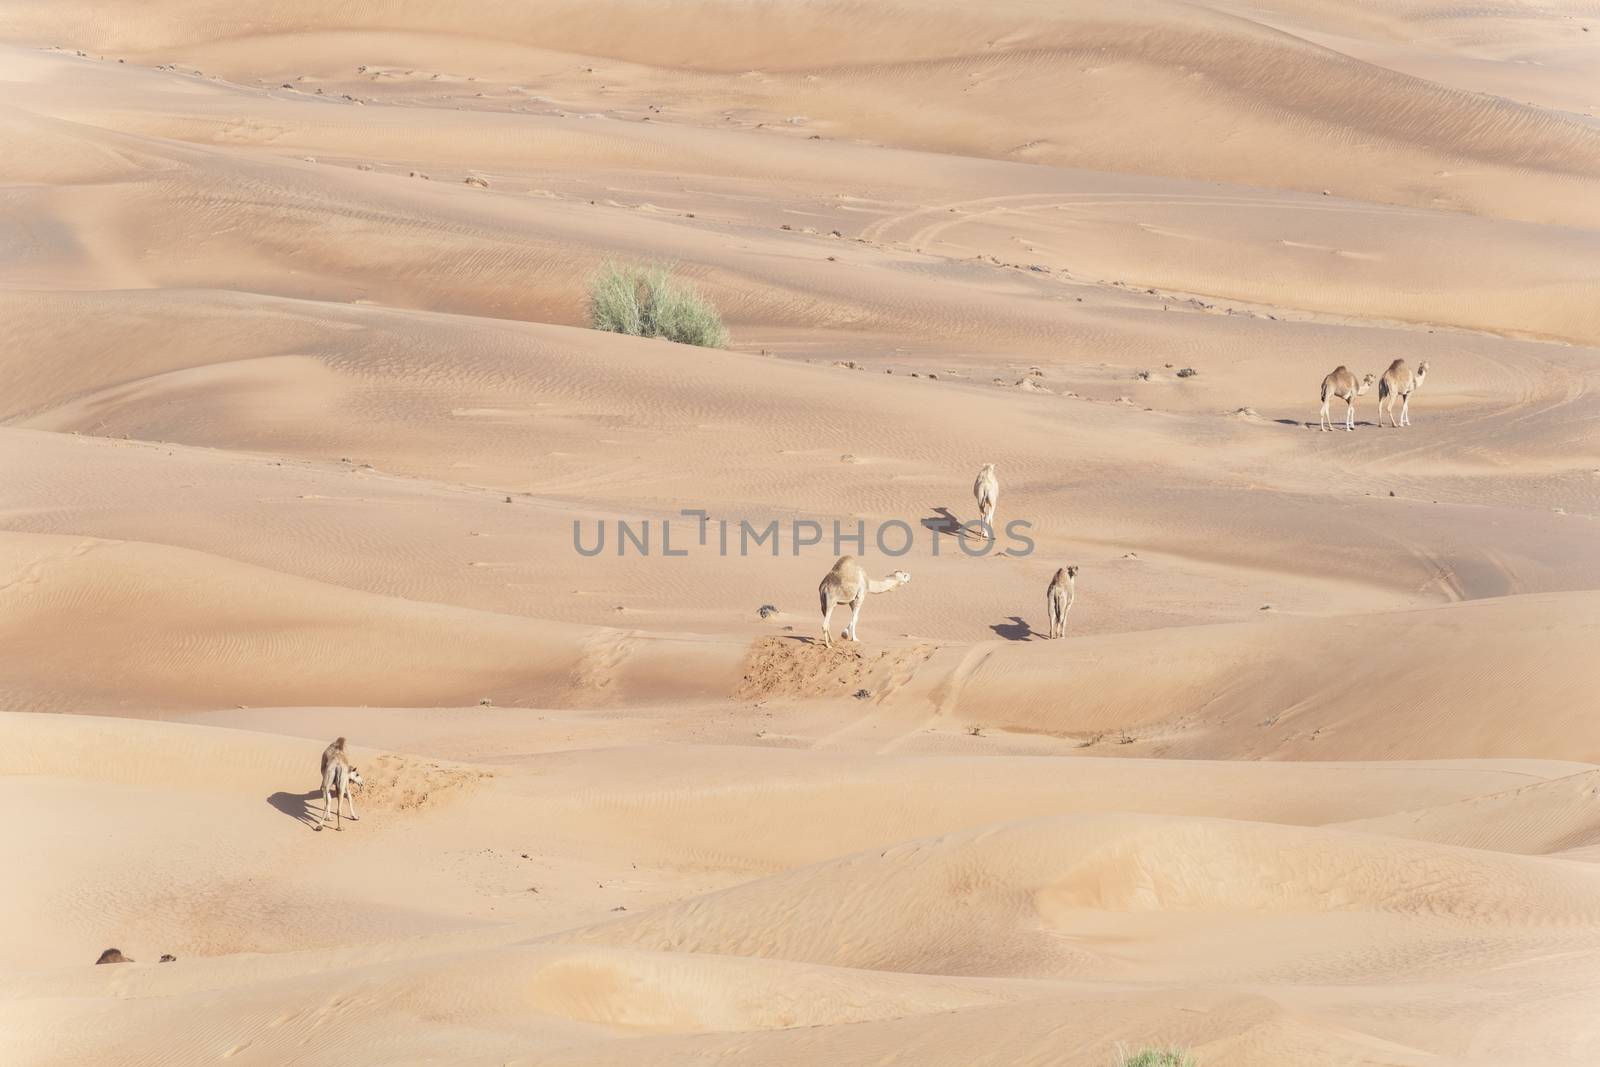 Red sand dunes. Camel caravan in Sharjah desert. United Arab Emirates (UAE). Middle East